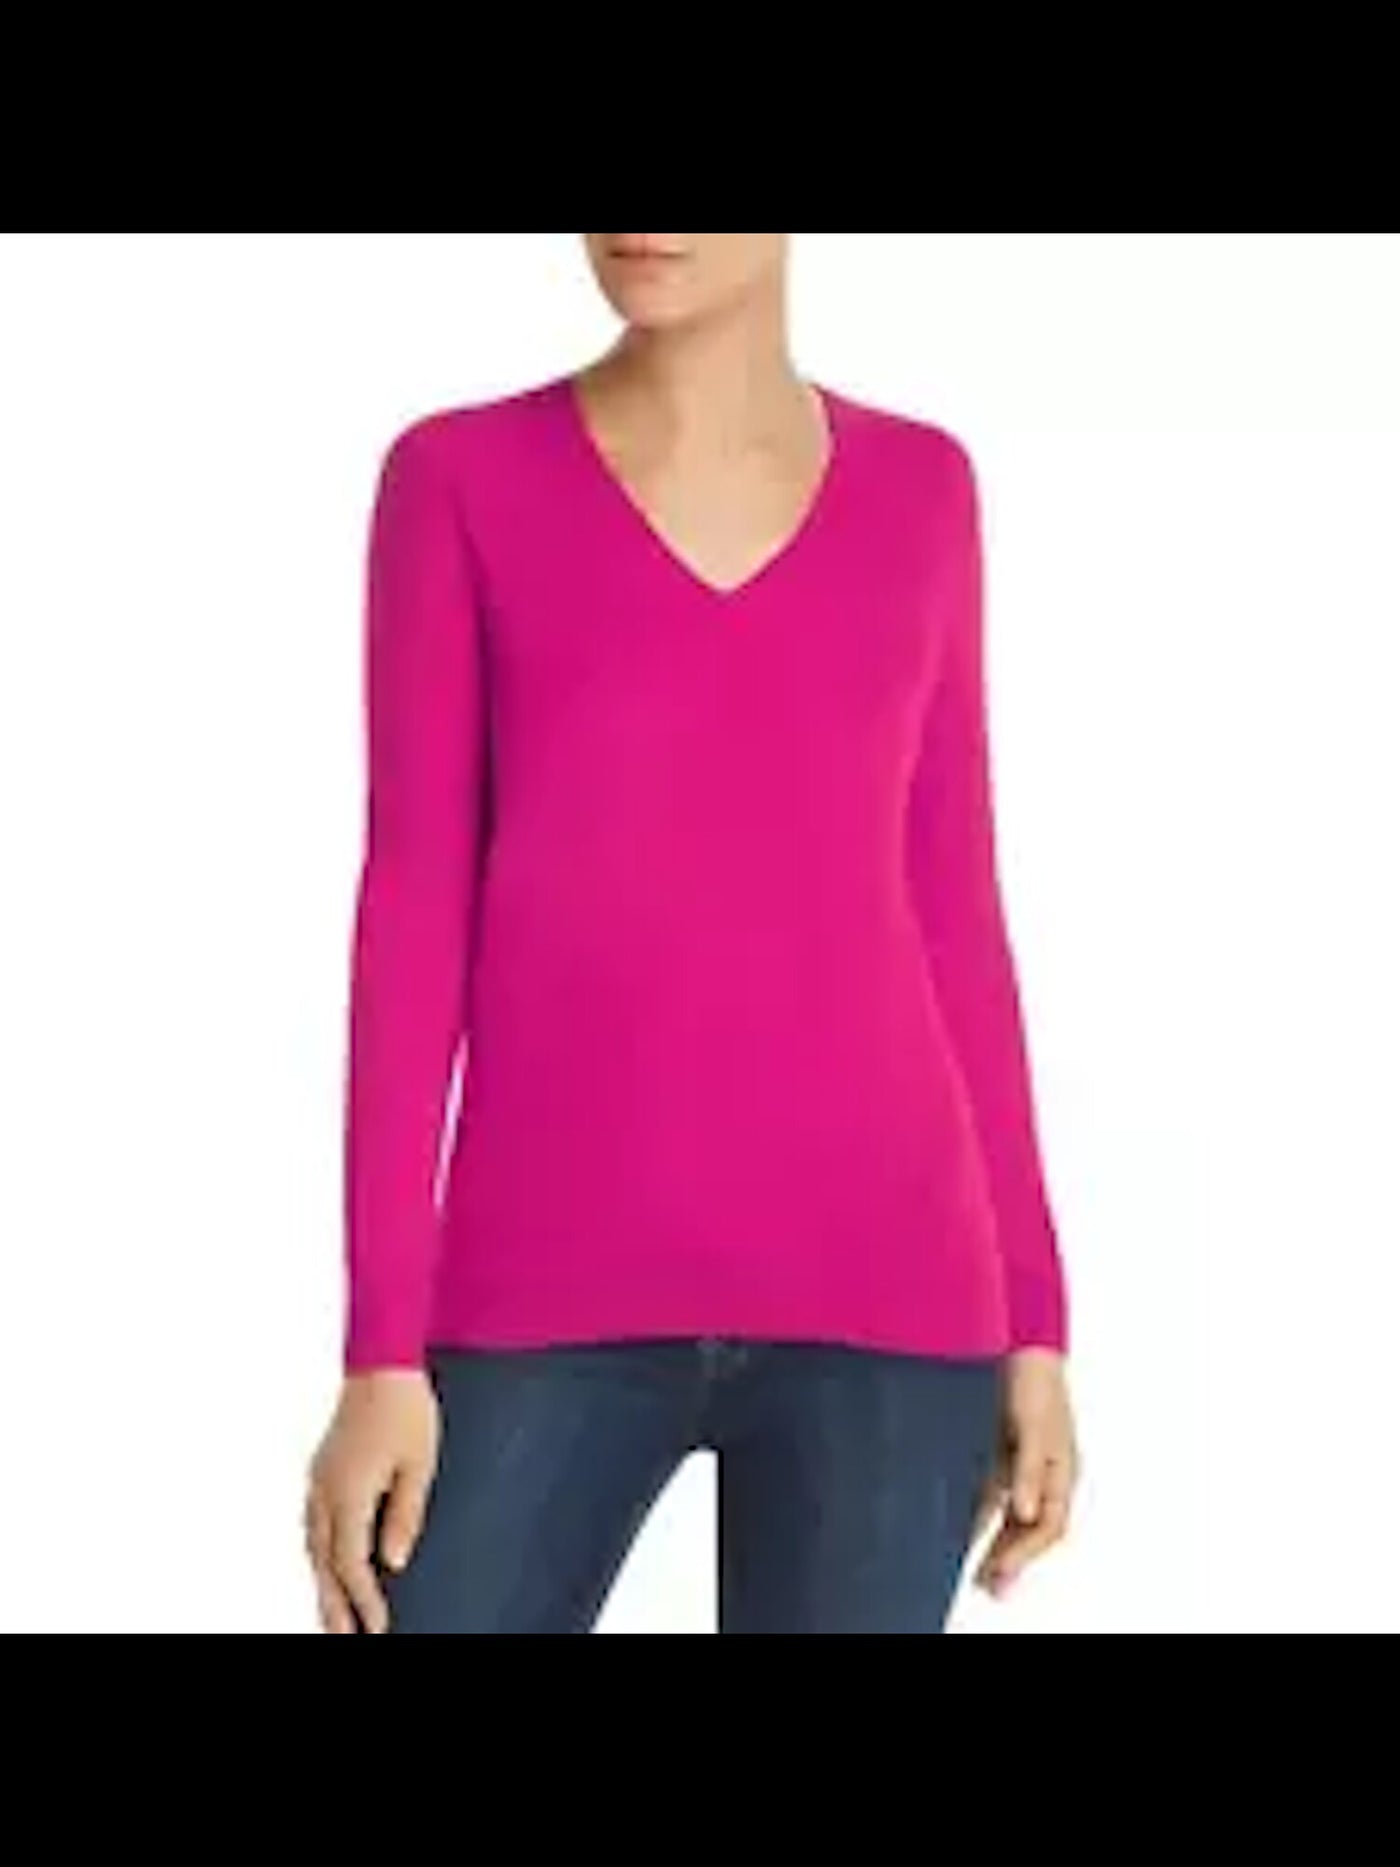 Designer Brand Womens Pink Cashmere Long Sleeve V Neck Wear To Work Sweater XXL